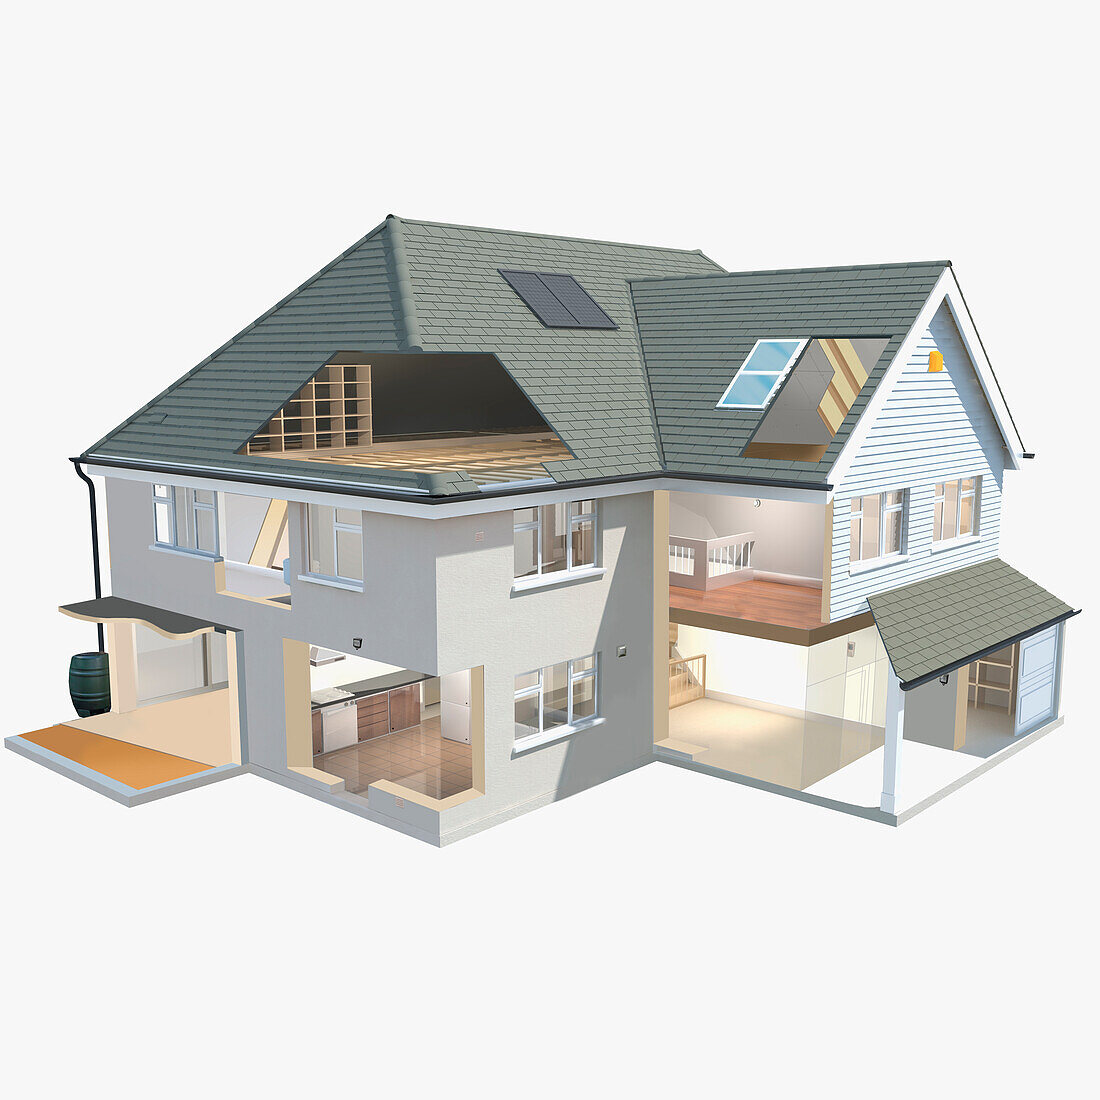 Energy efficient house, illustration